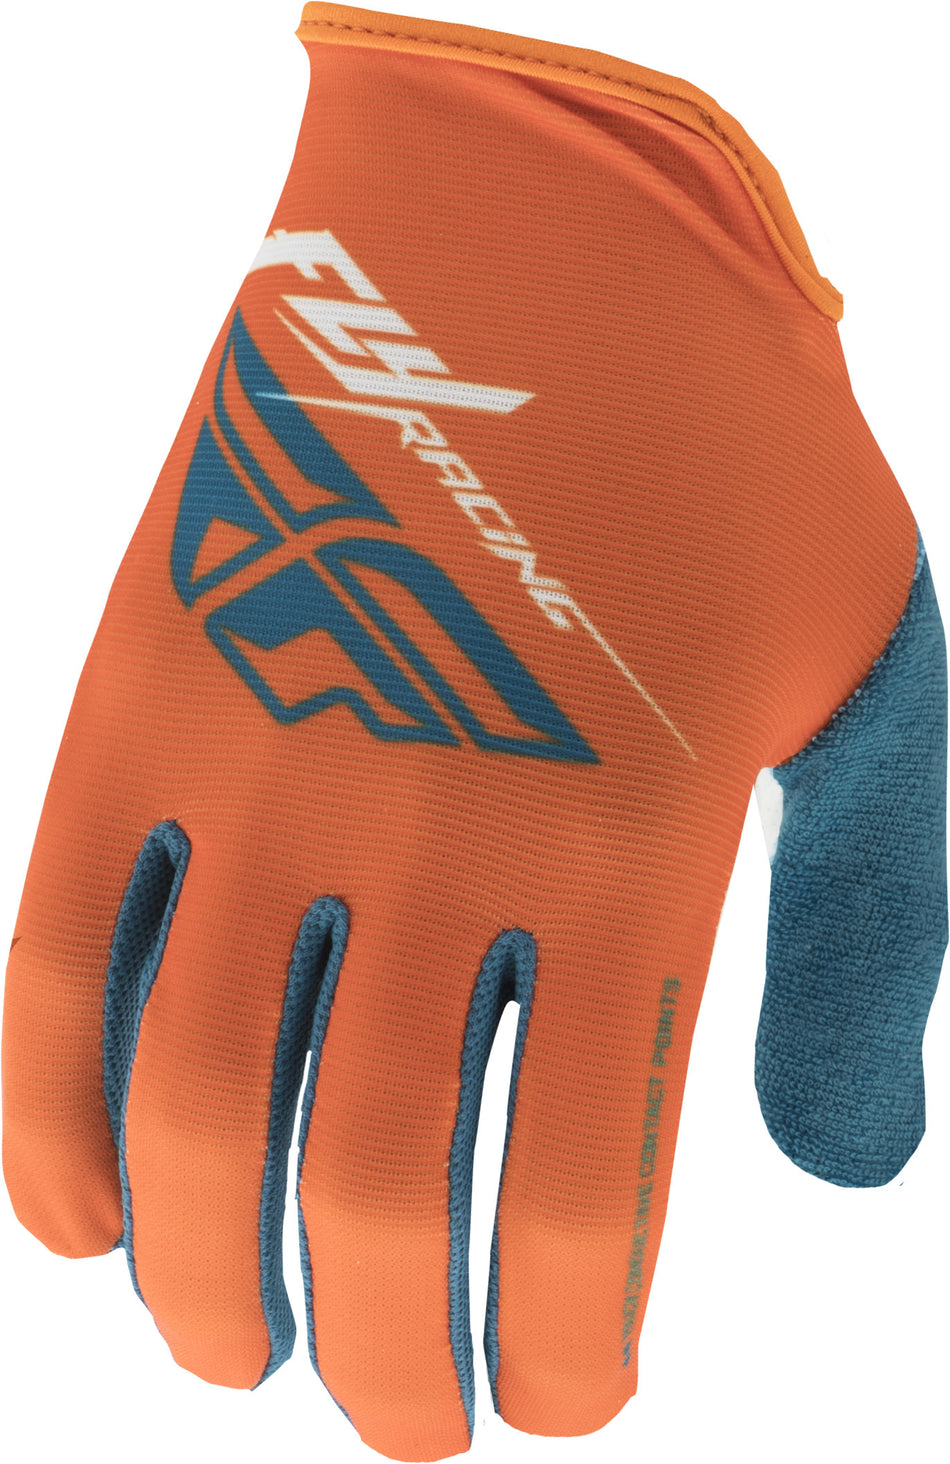 FLY RACING Media Gloves Orange/Teal/White Sz 11 350-09811